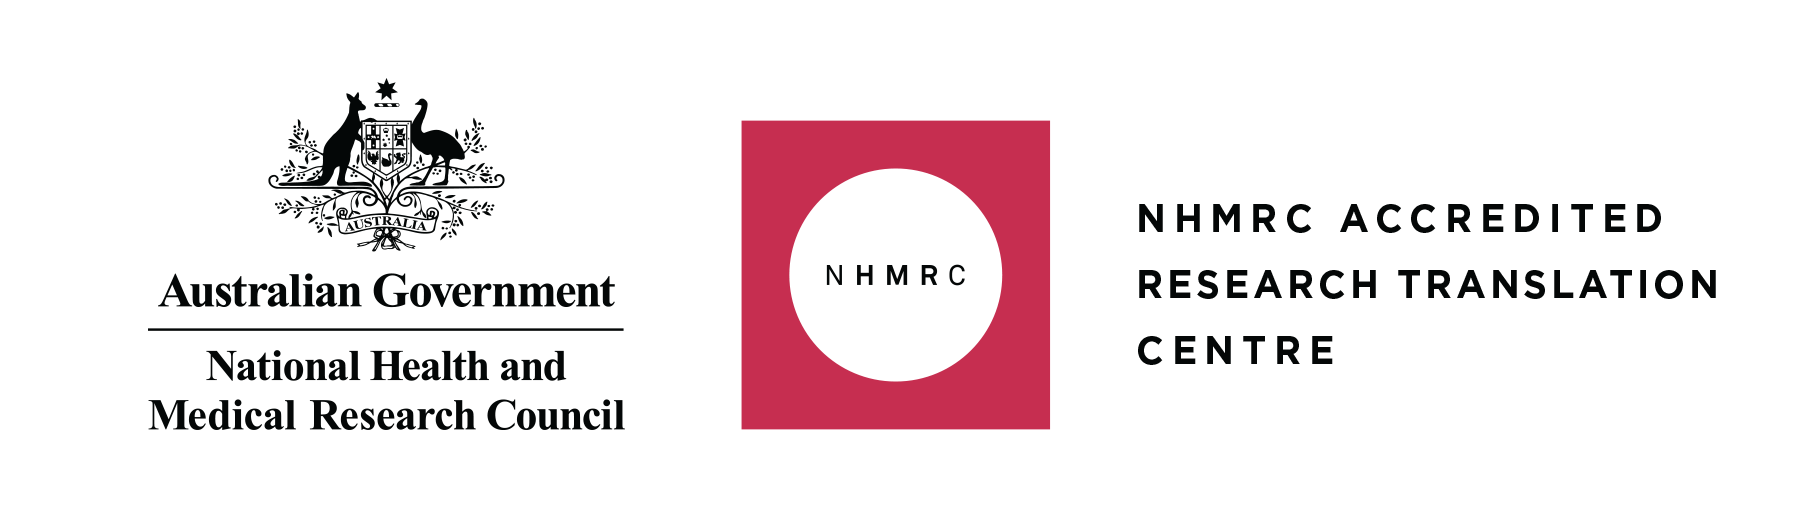 NHMRC Footer Logo